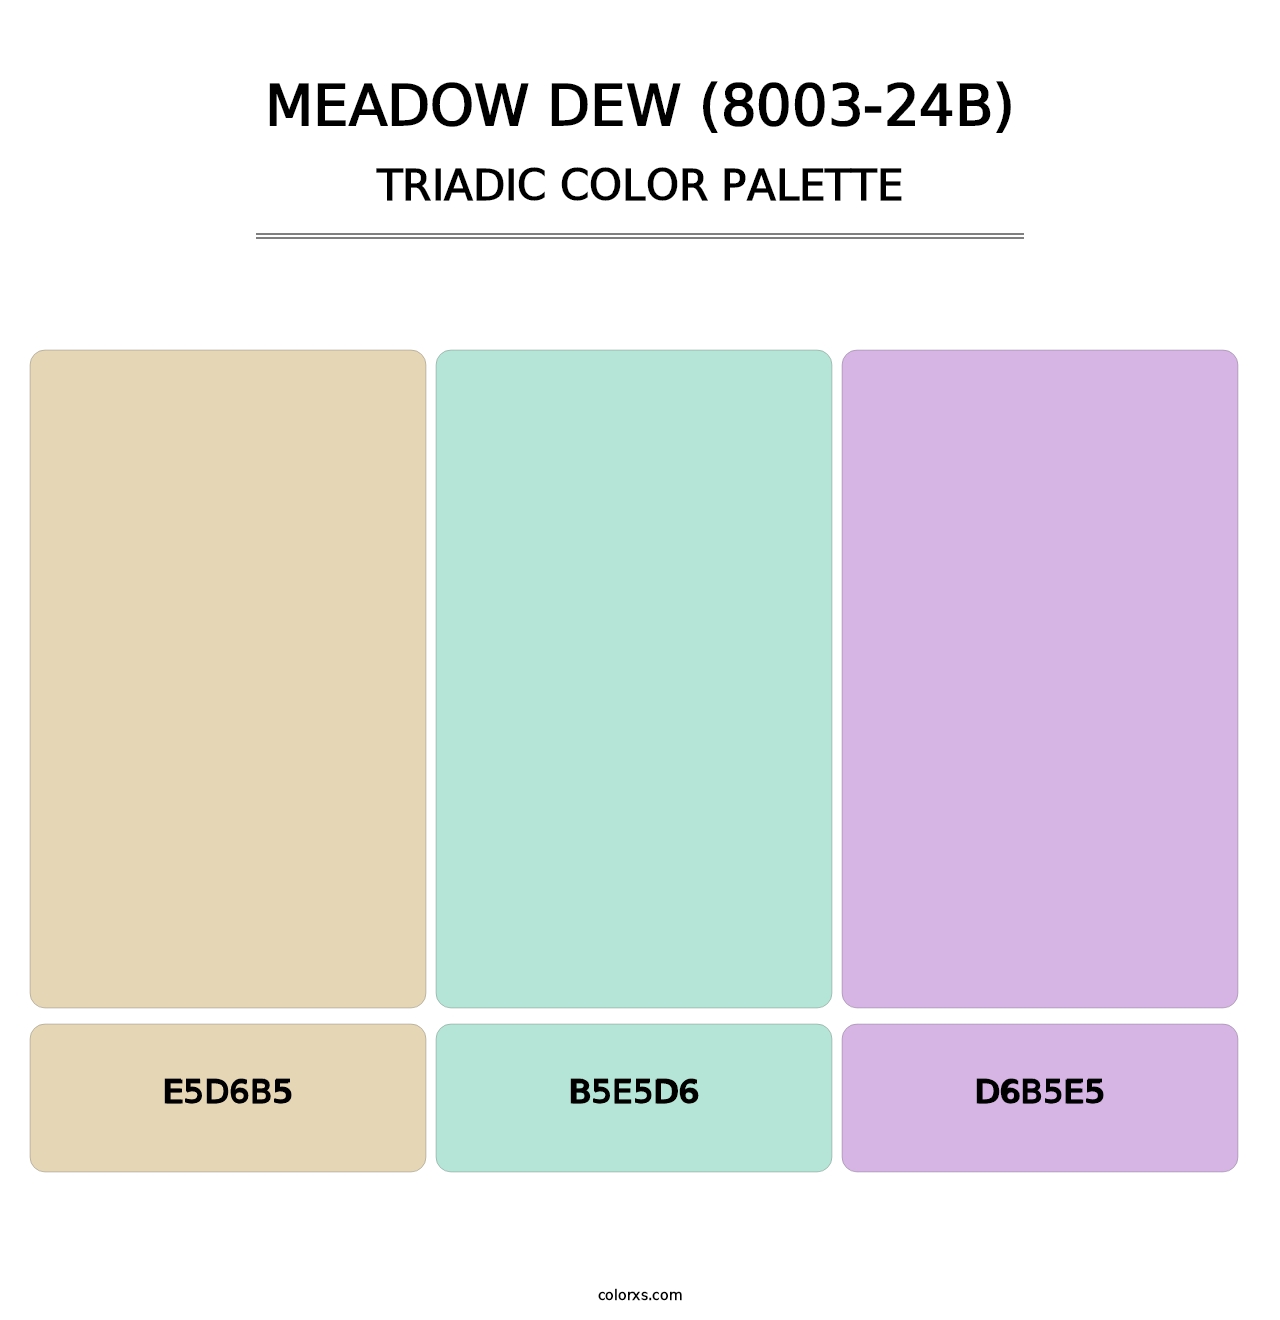 Meadow Dew (8003-24B) - Triadic Color Palette